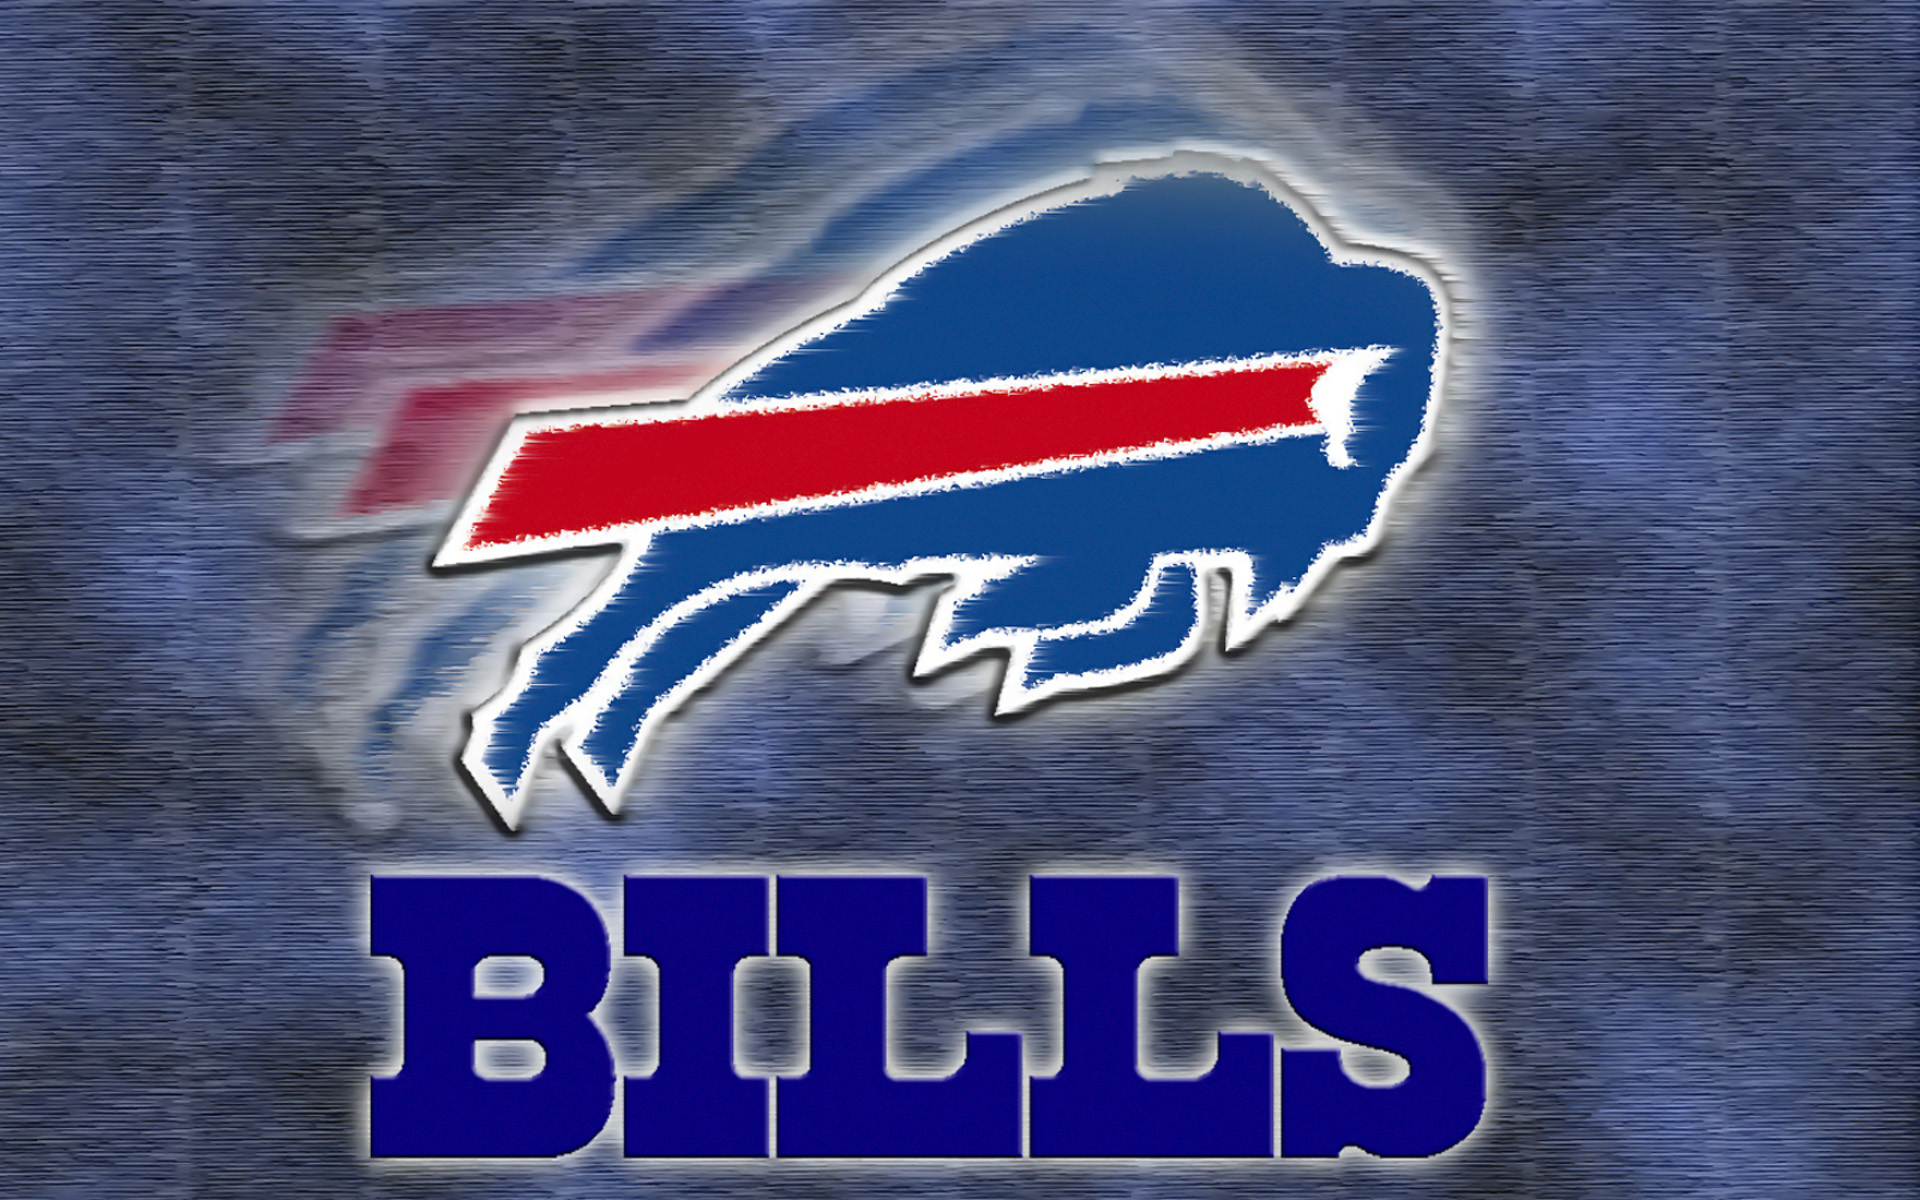 Buffalo Bills Images.